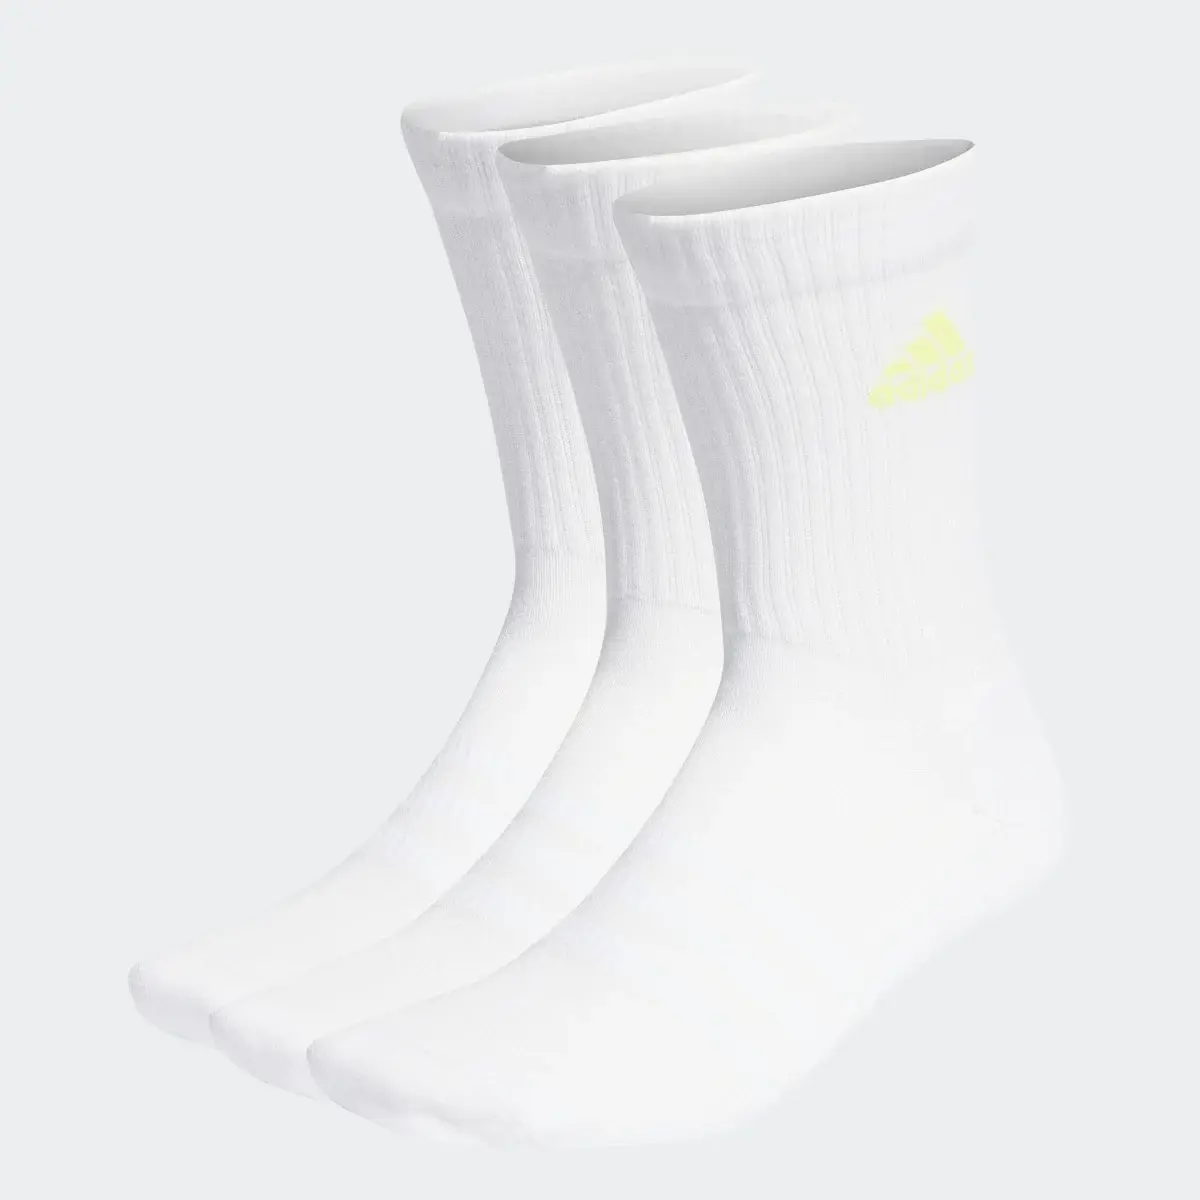 Adidas Cushioned Crew Socks 3 Pairs. 1